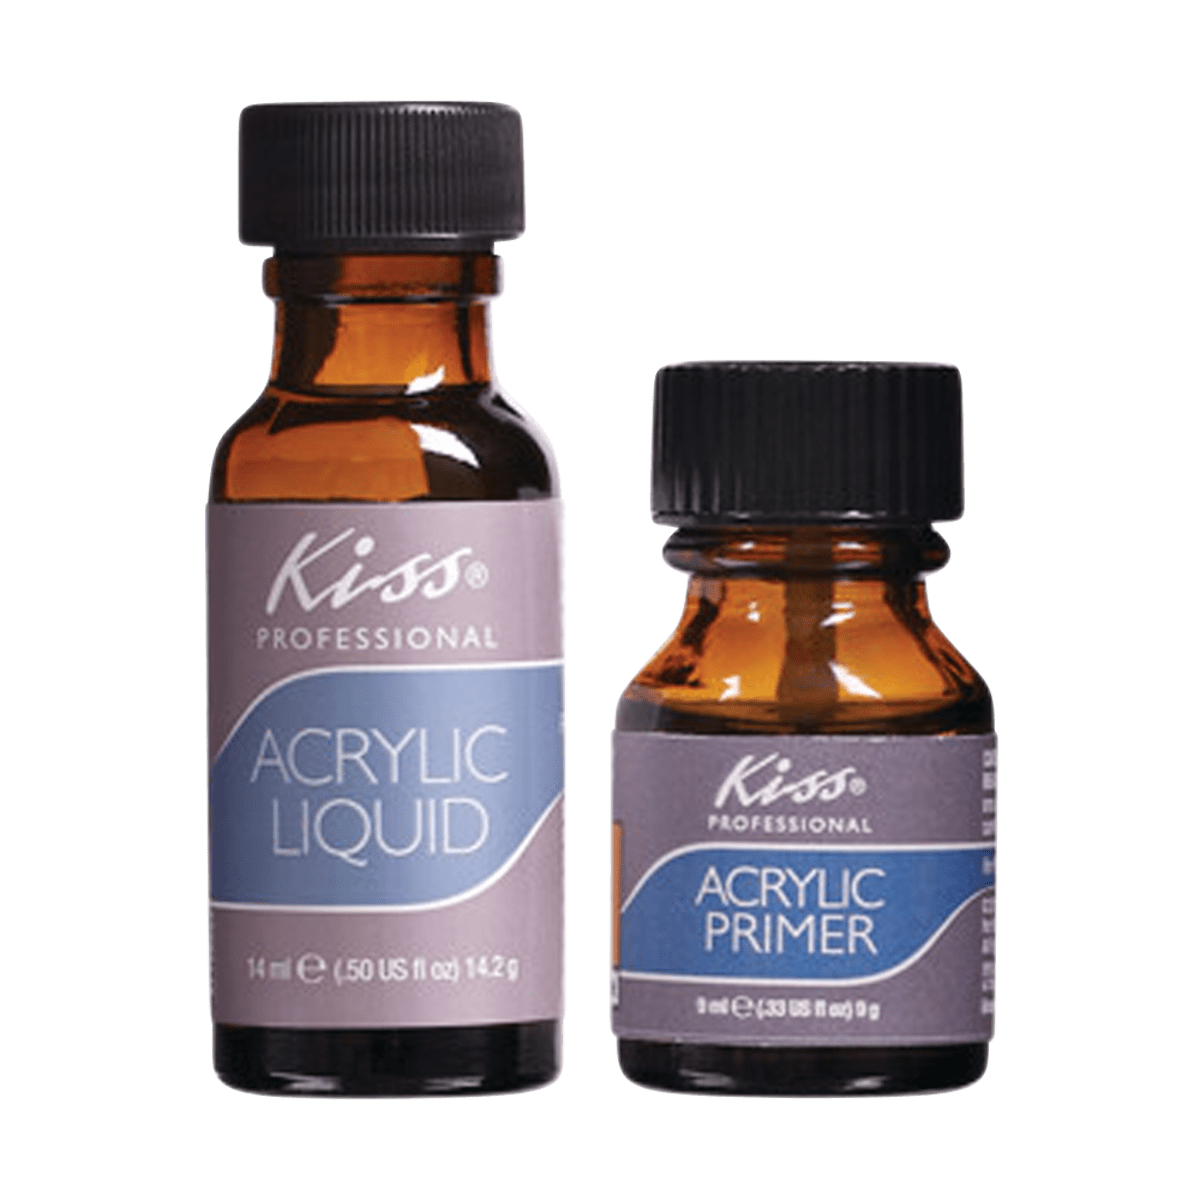 KISS Complete Salon Acrylic Nail Kit, 64 Count